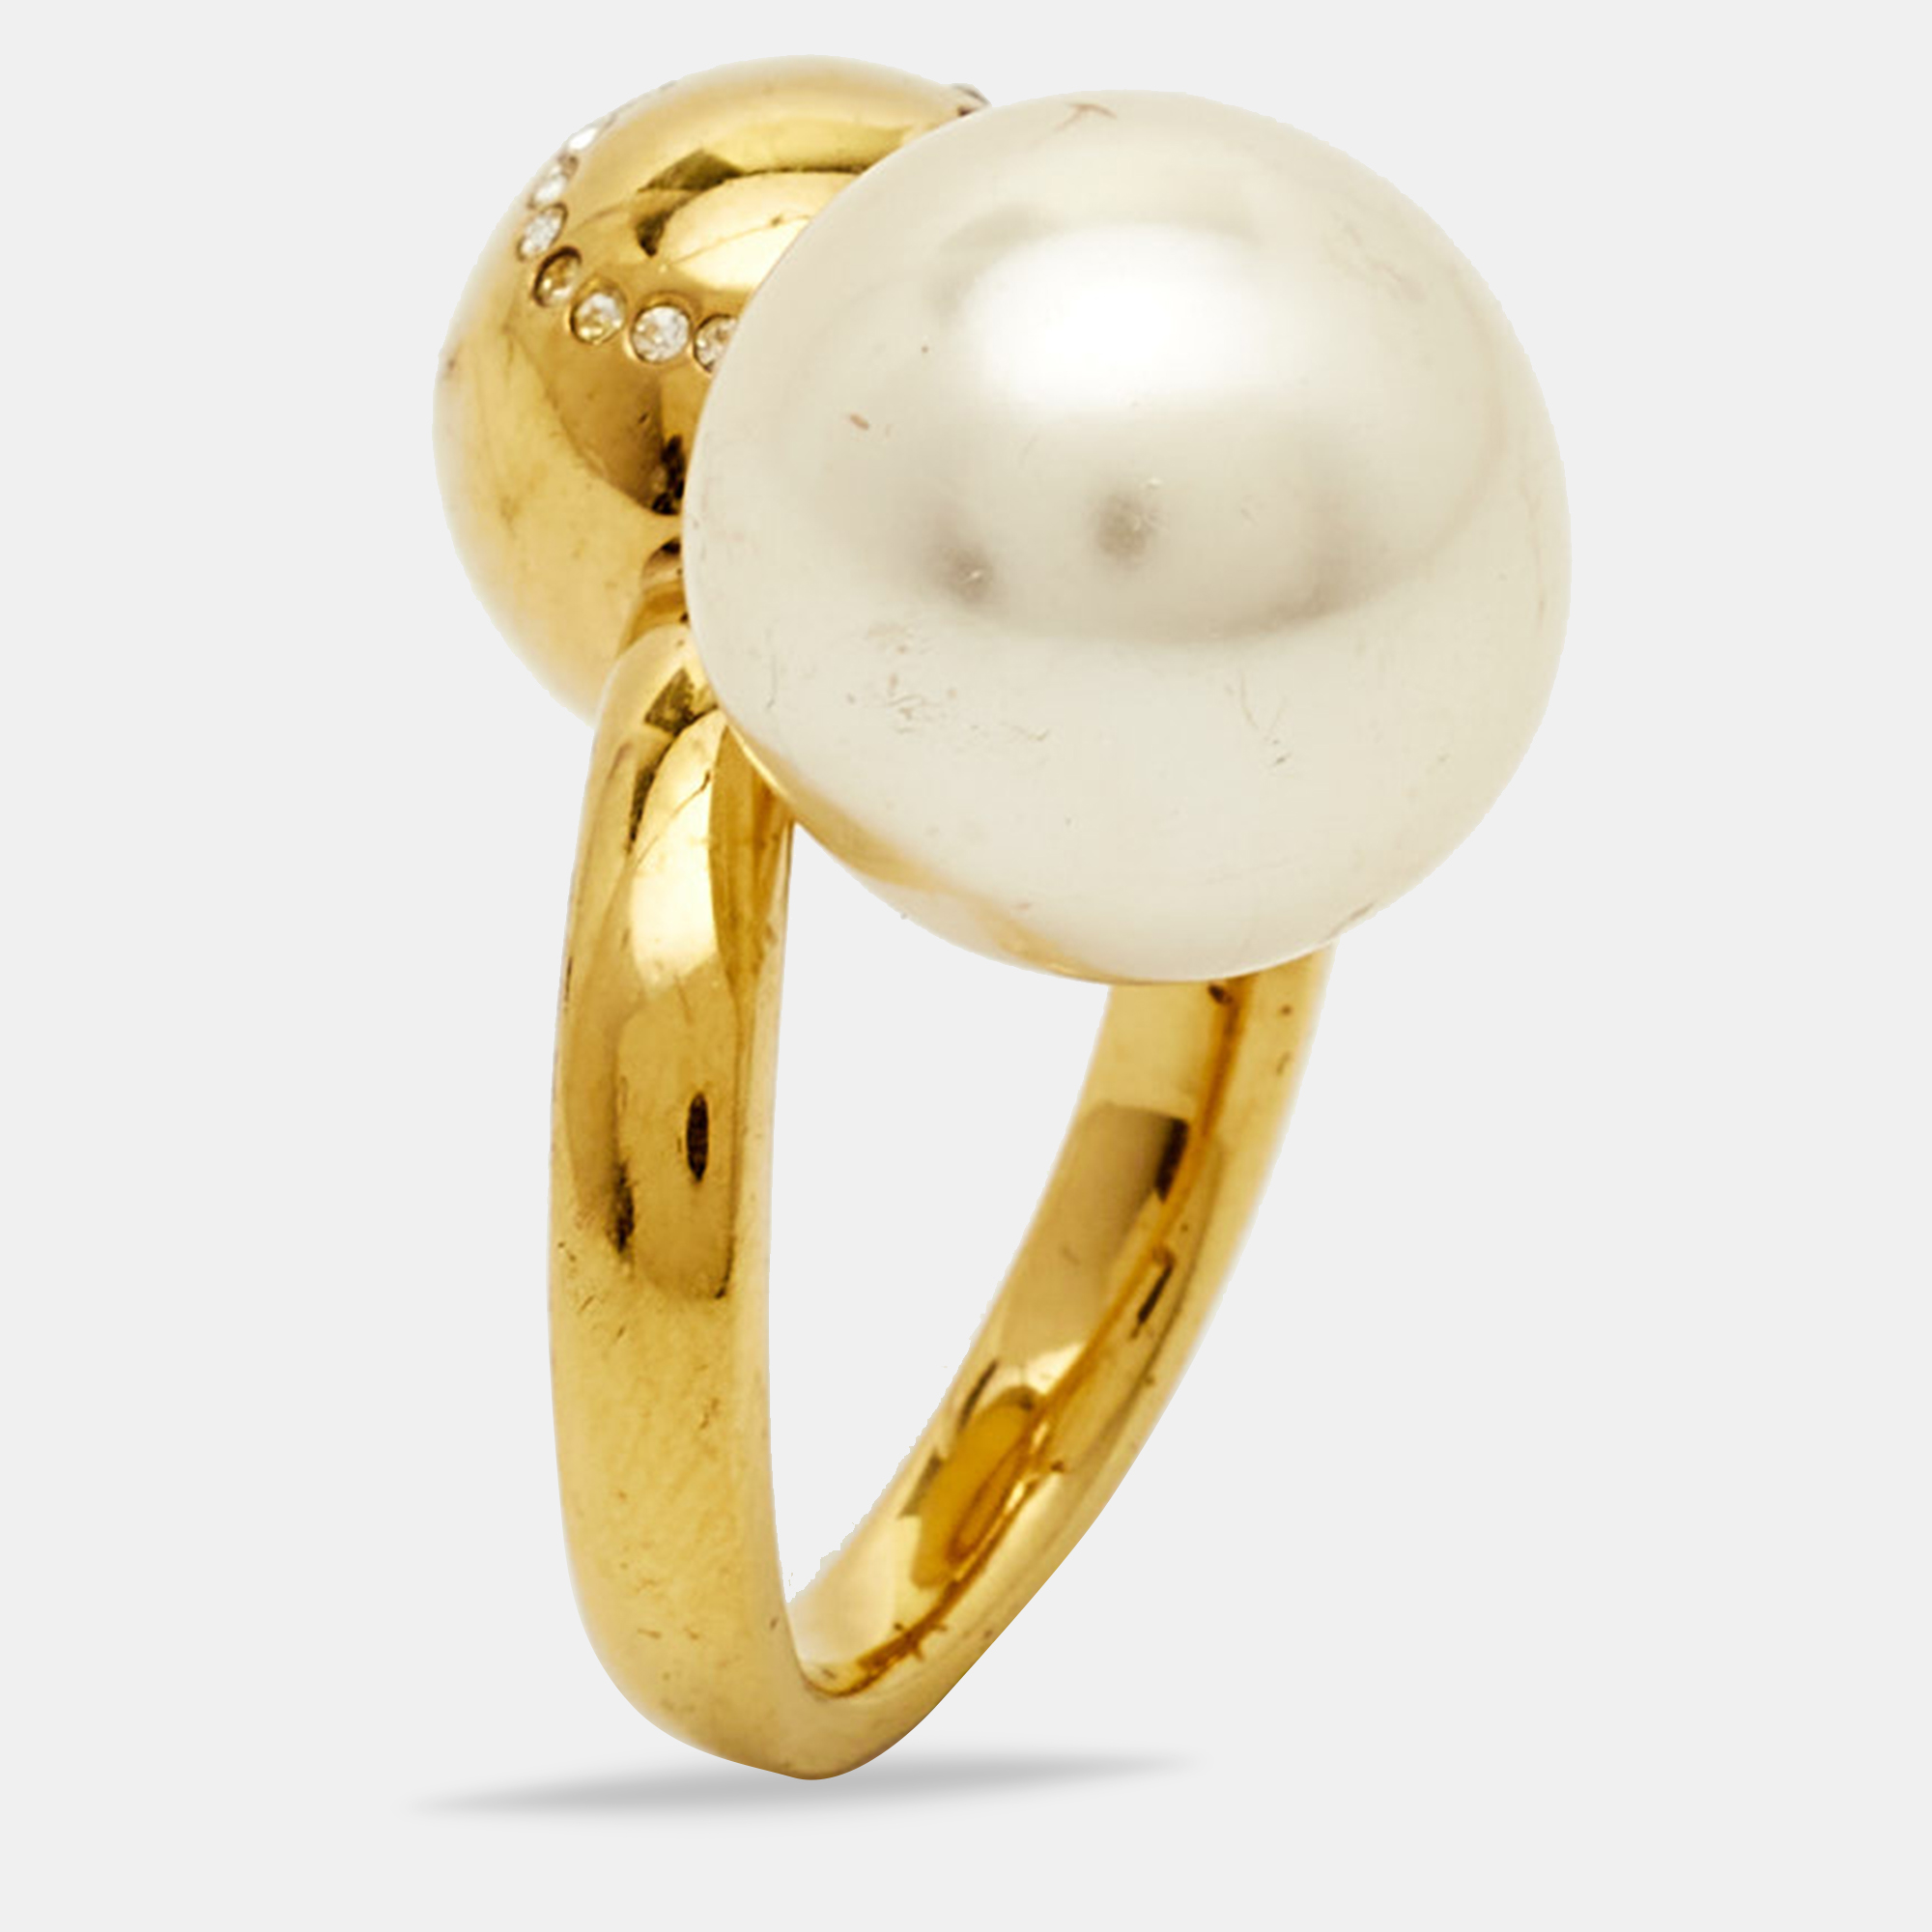 Carolina Herrera CH Faux Pearl Crystal Gold Tone Ring Size 49